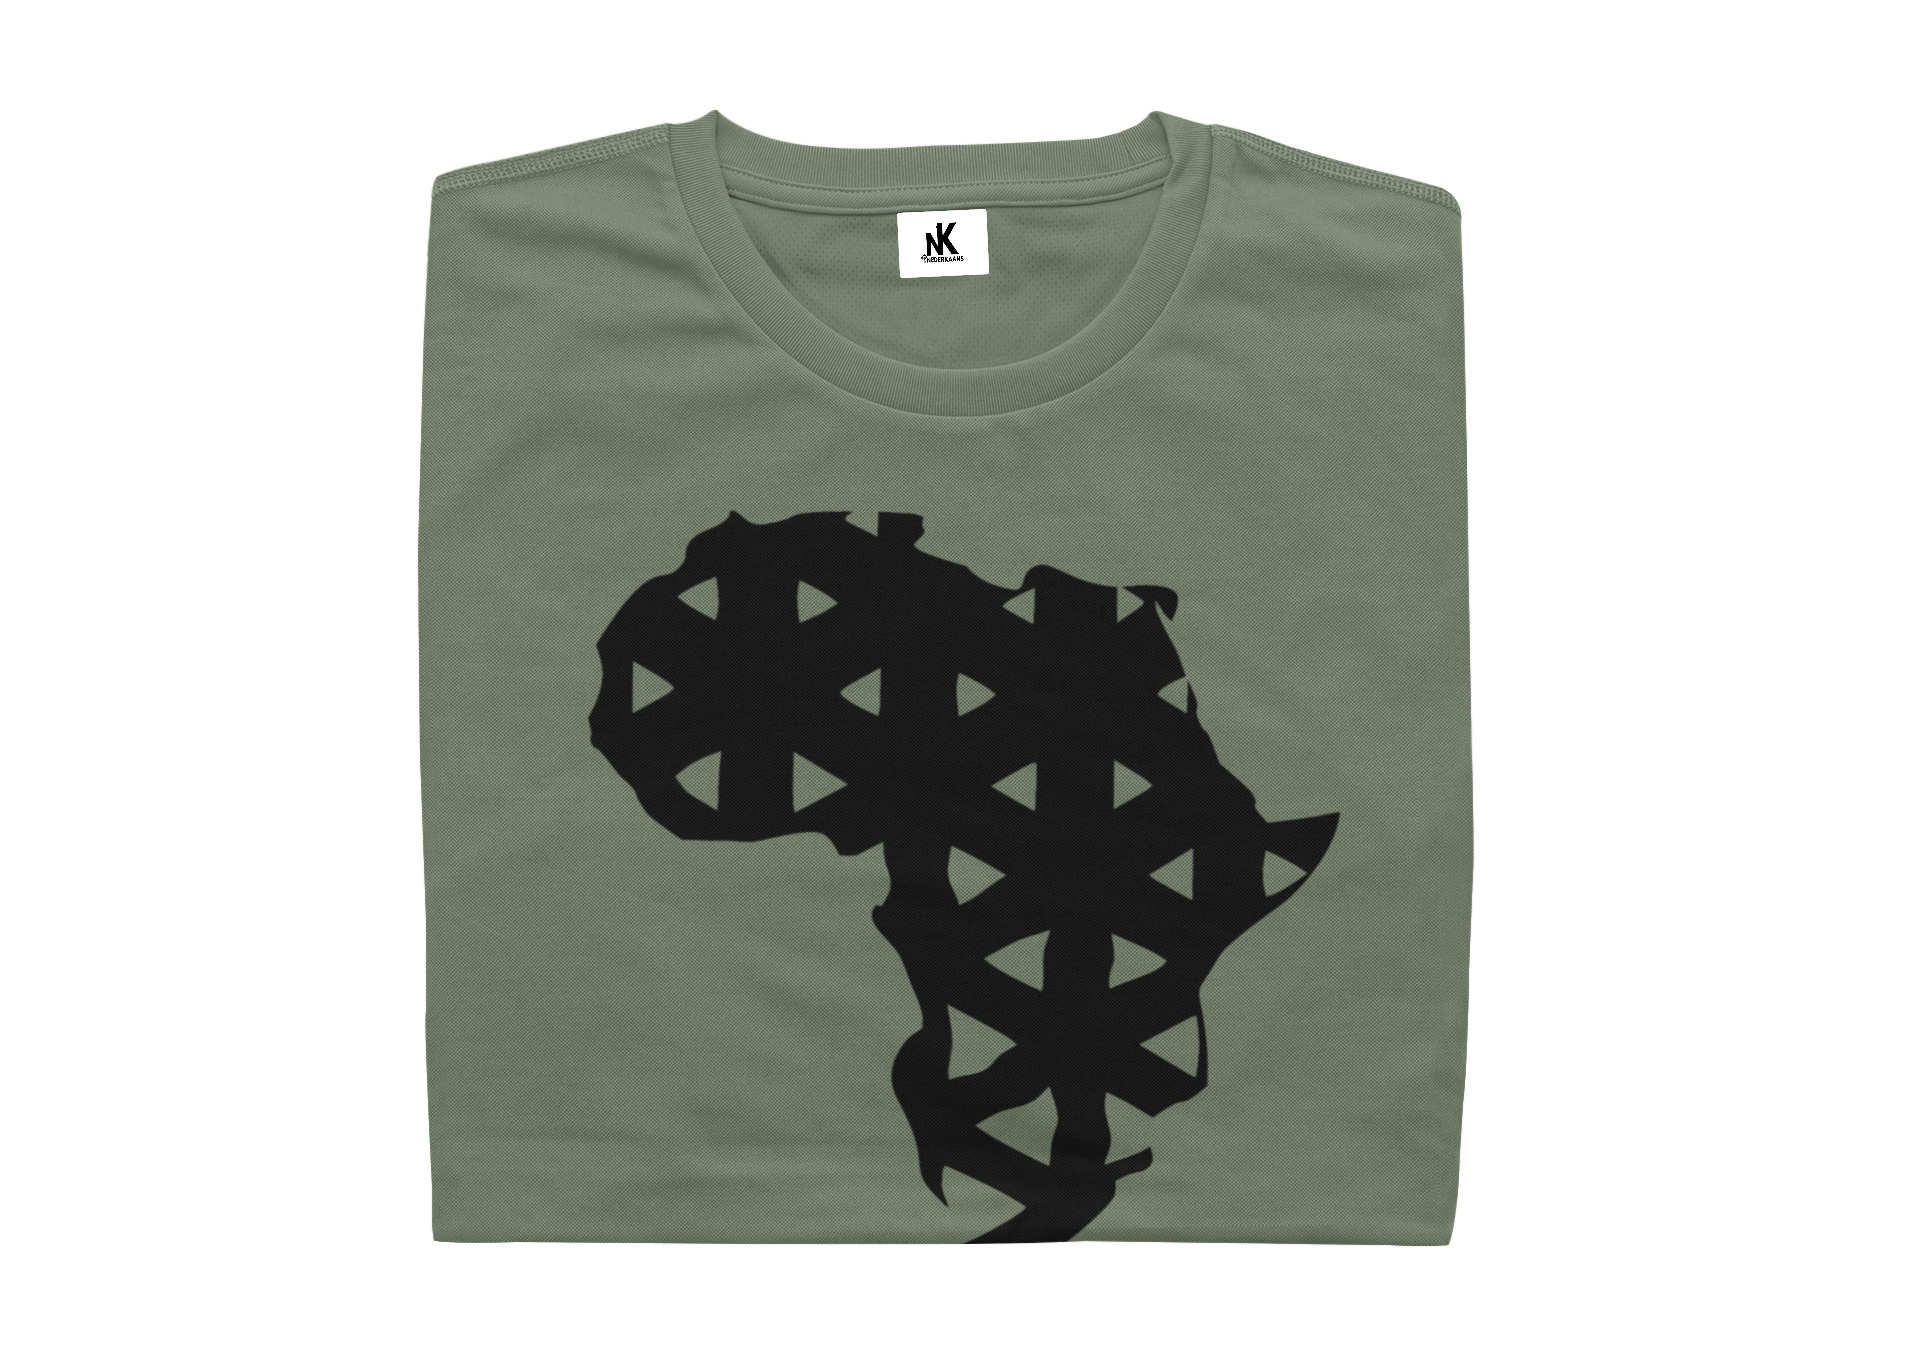 Africa Design - Ladies Shirt - SAVE 58%